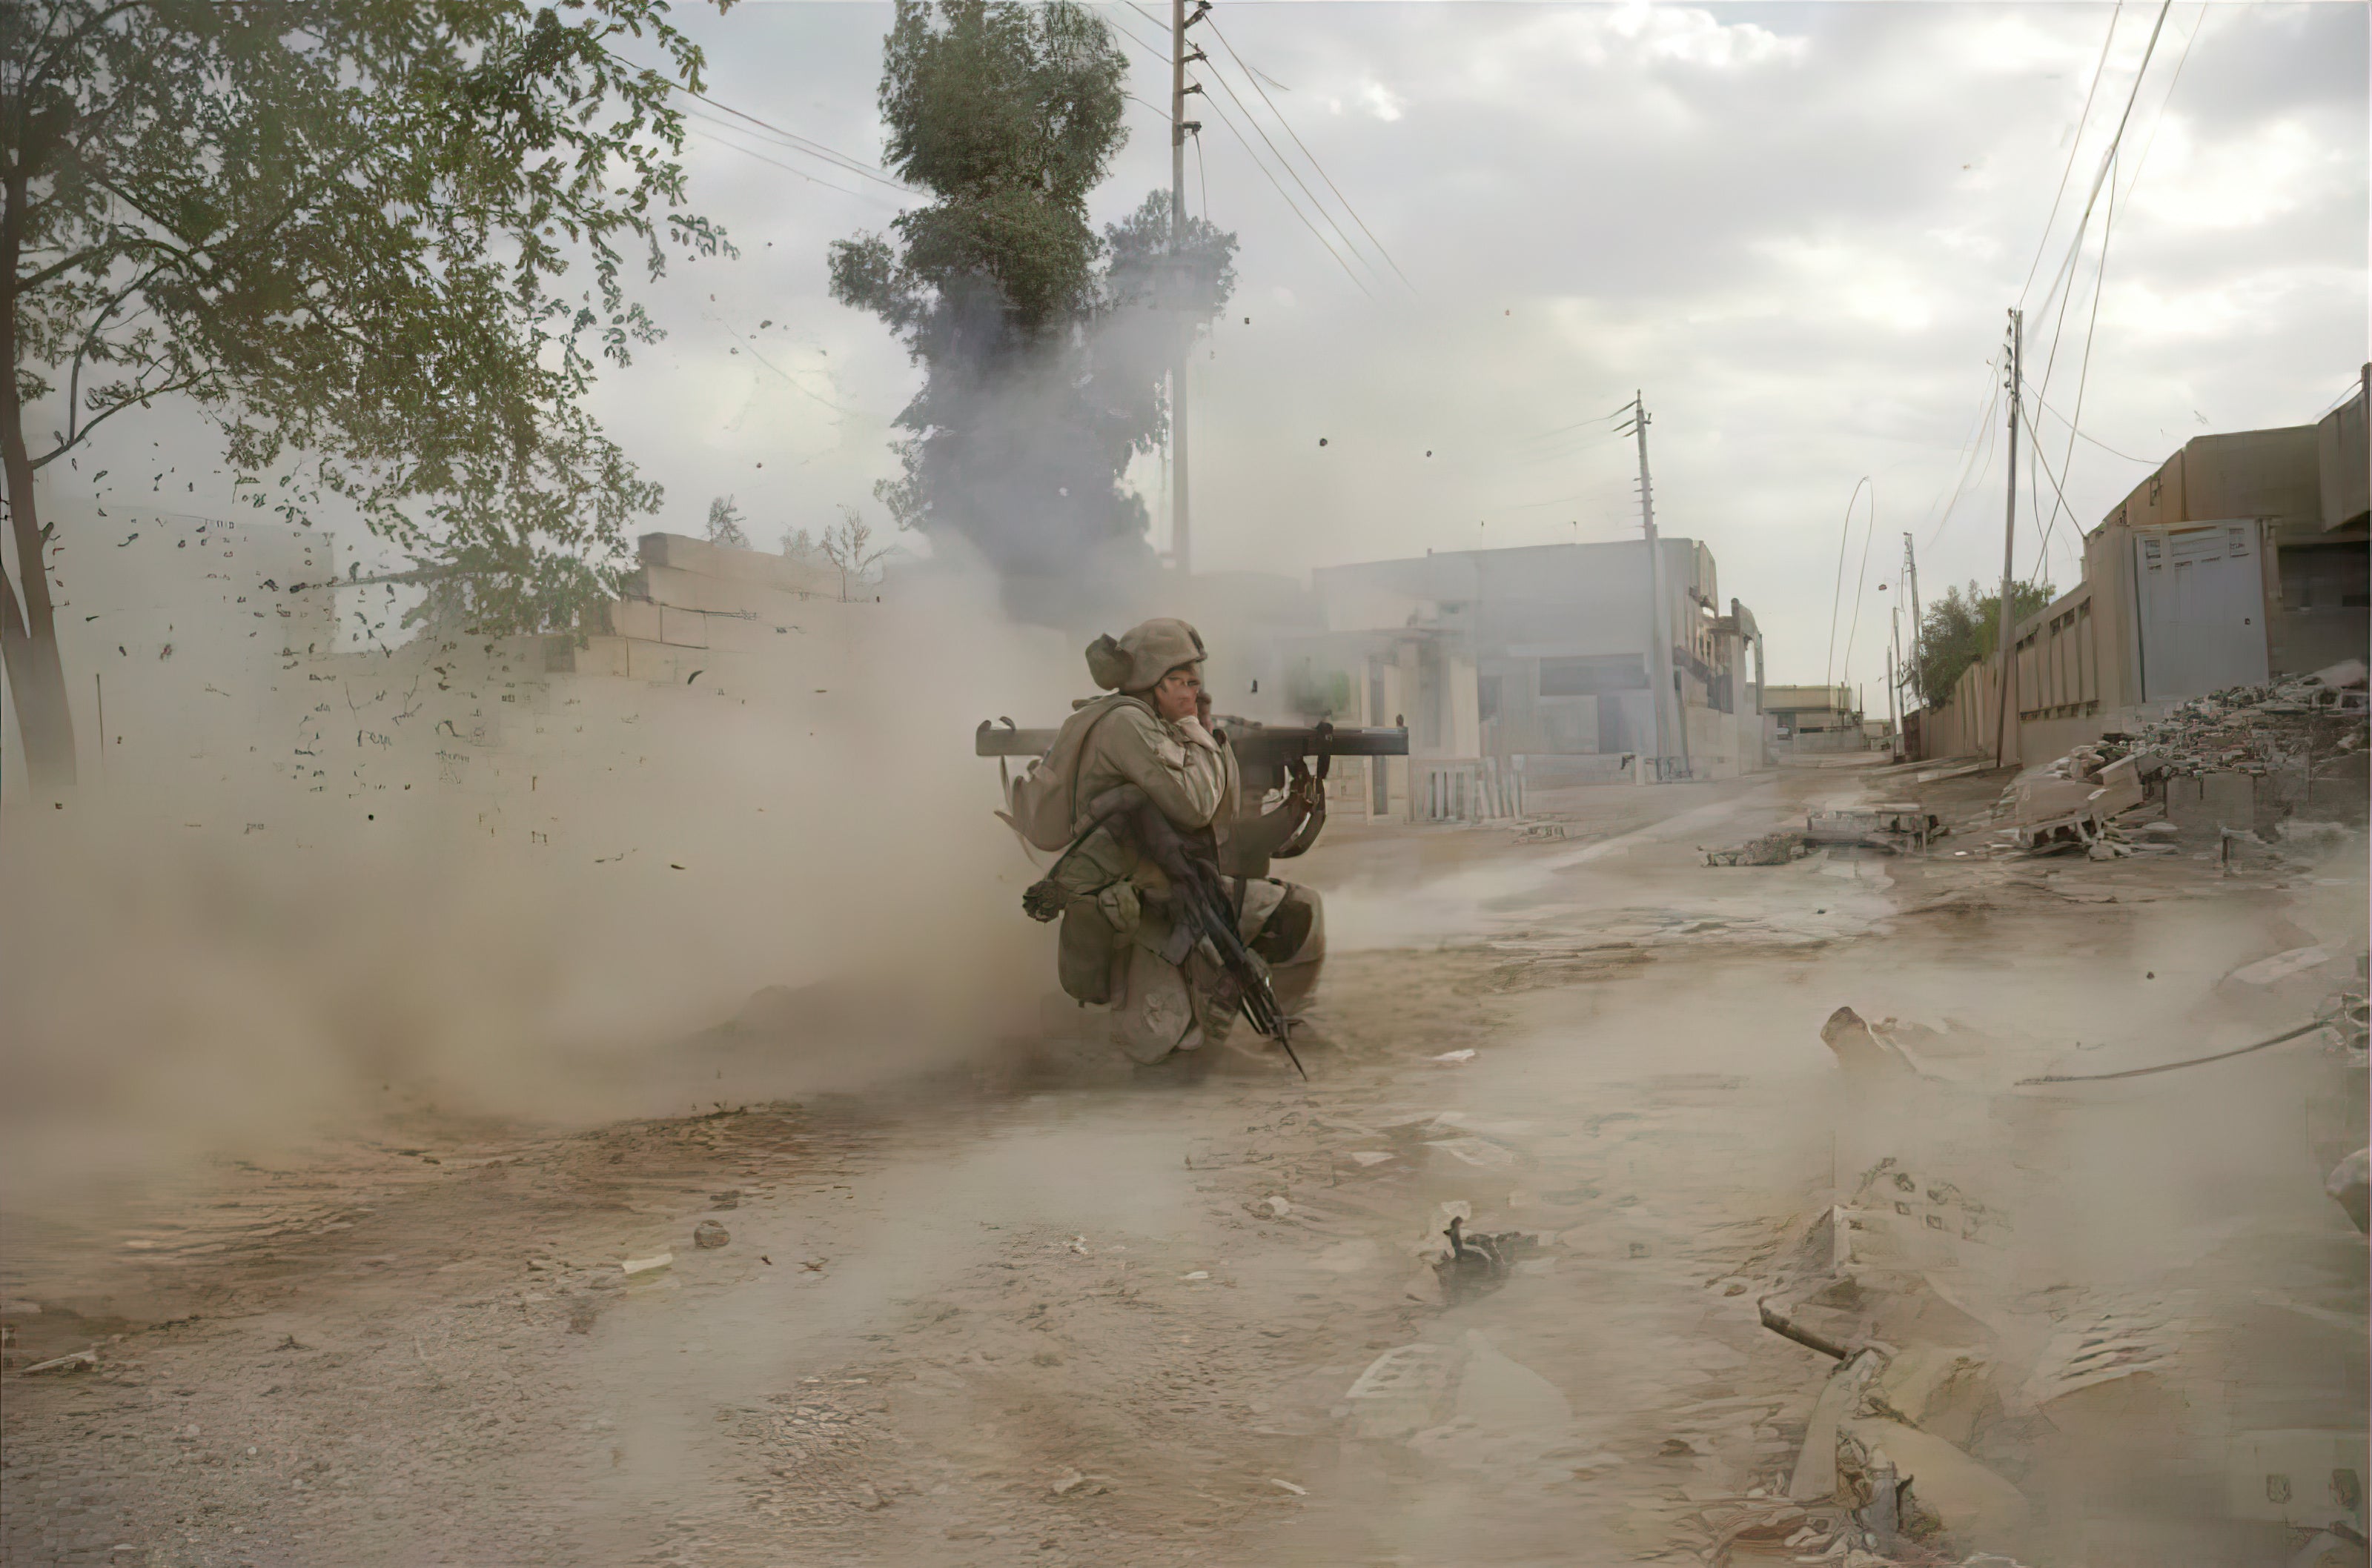 Battlefield Fallujah - Episode 8: No Worse Enemy (November 11, 2004) - Image from battle